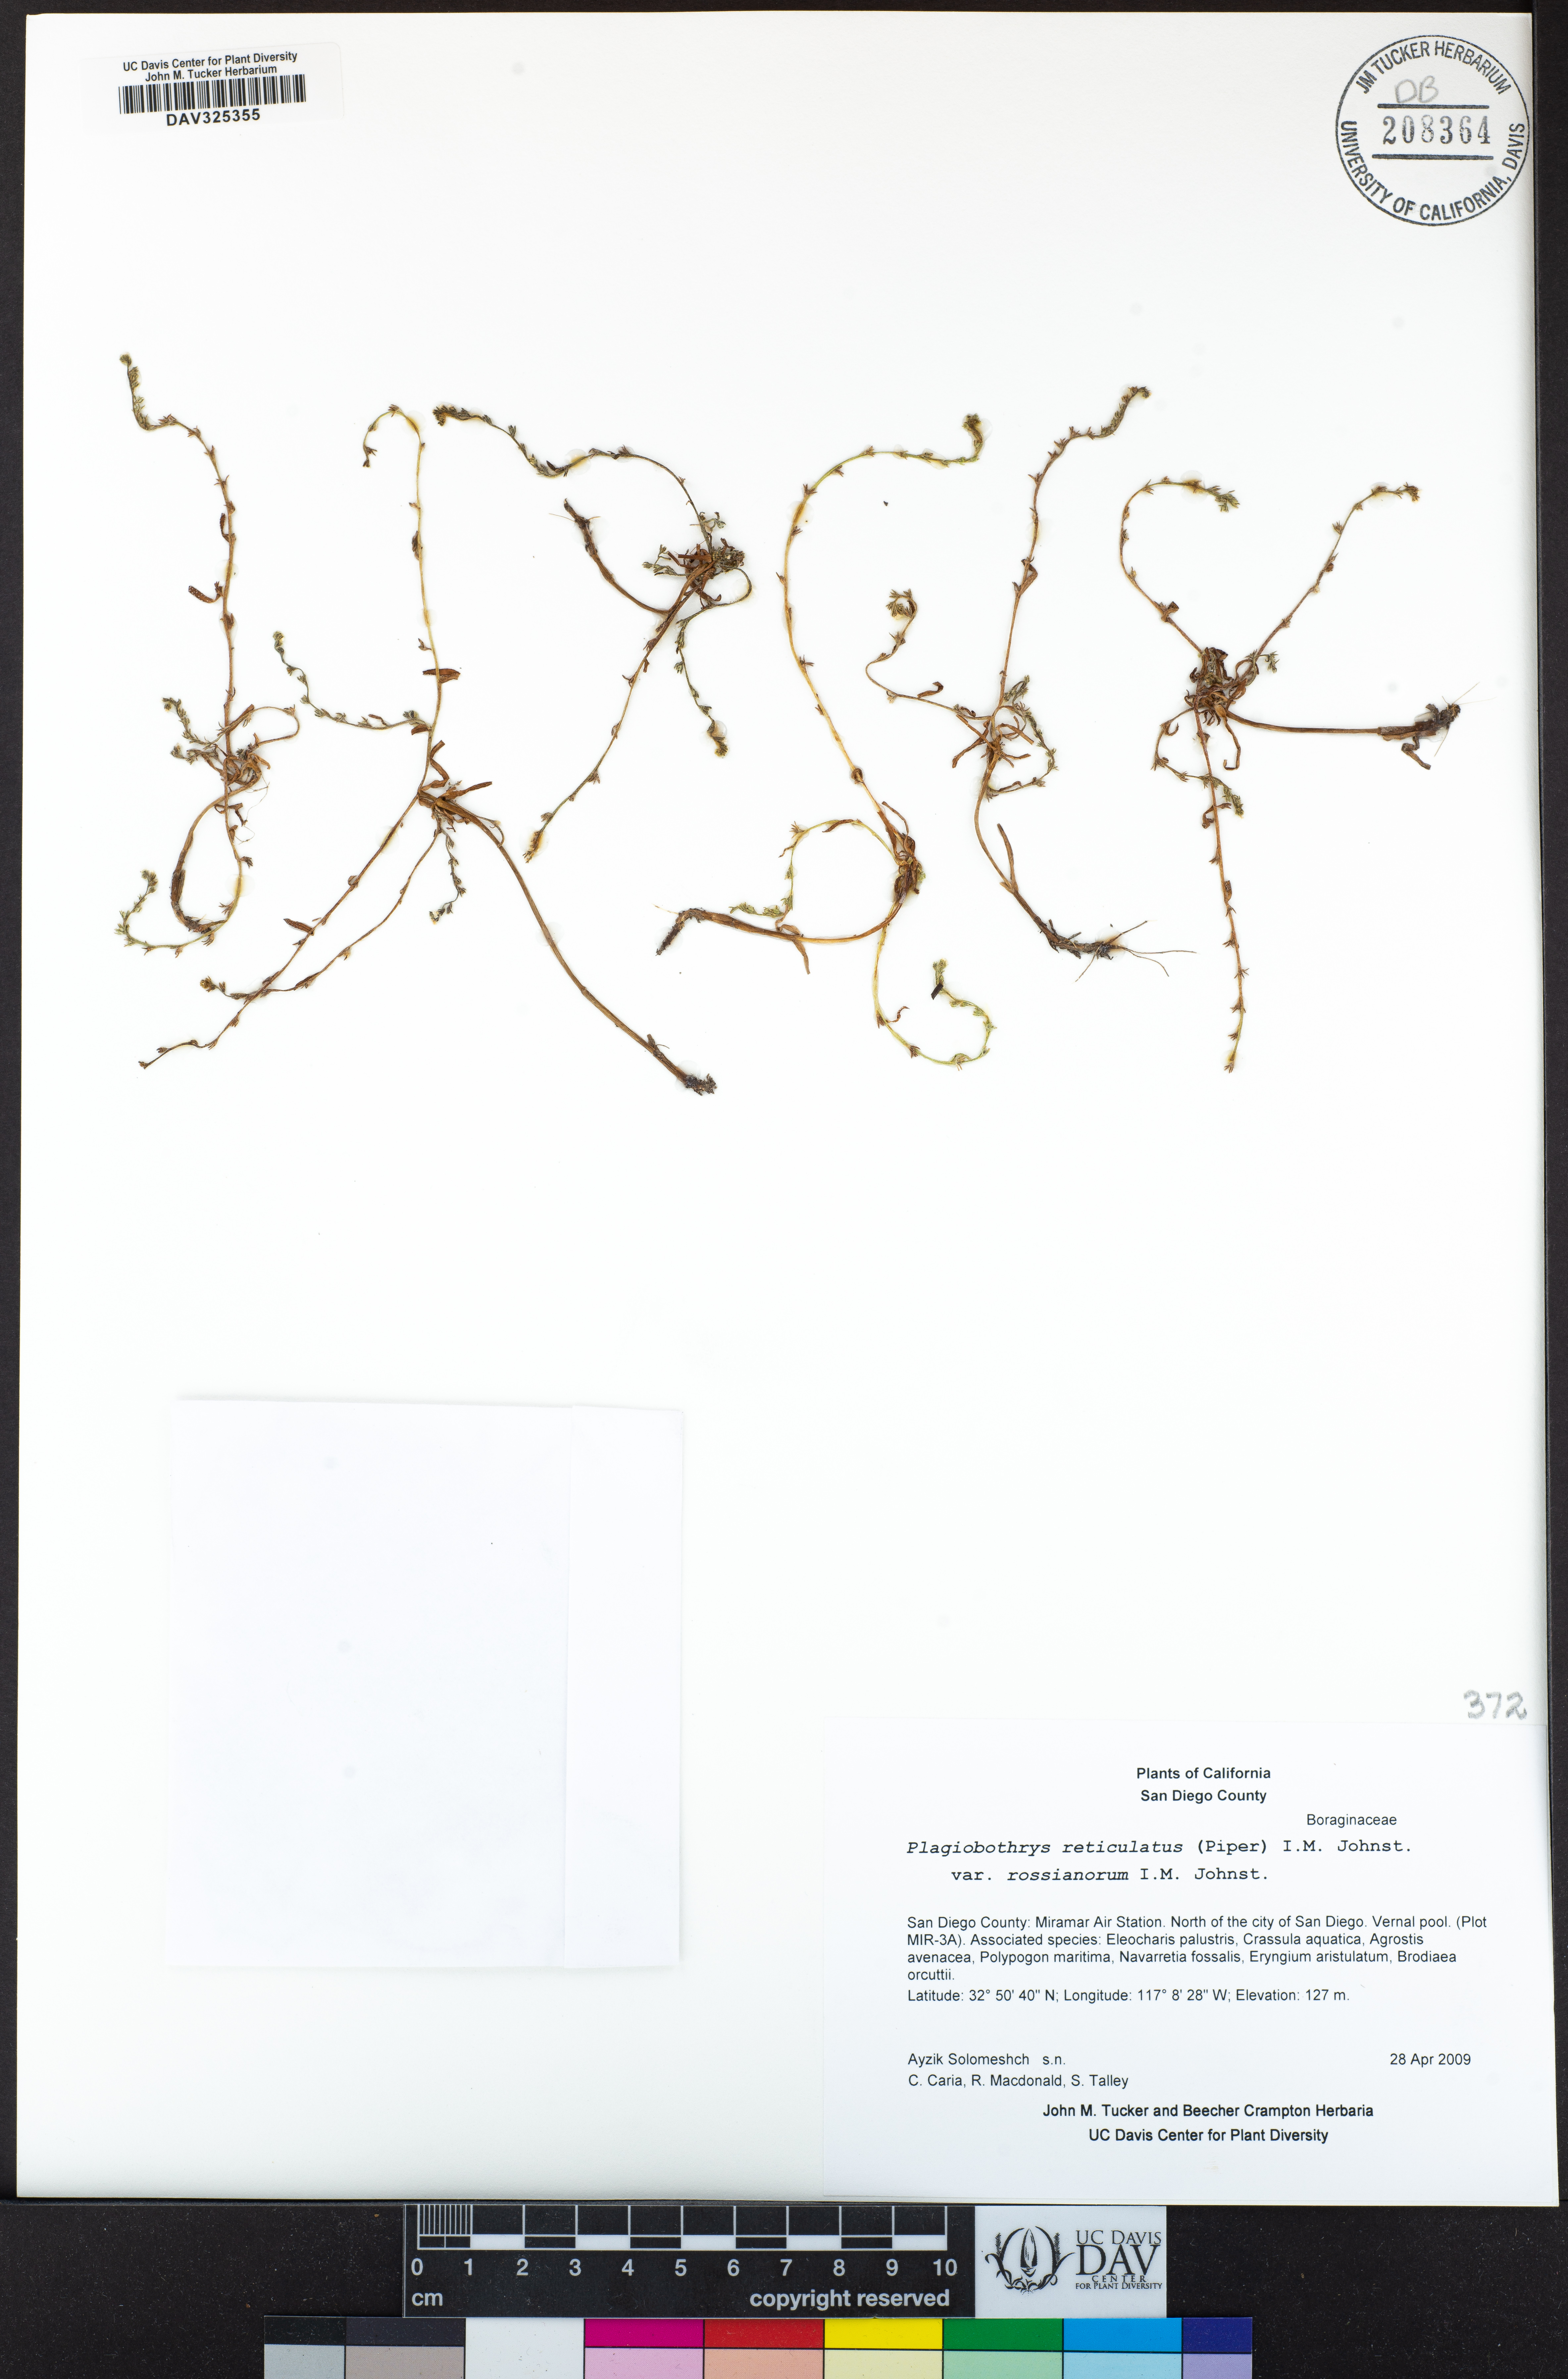 Plagiobothrys reticulatus var. rossianorum image